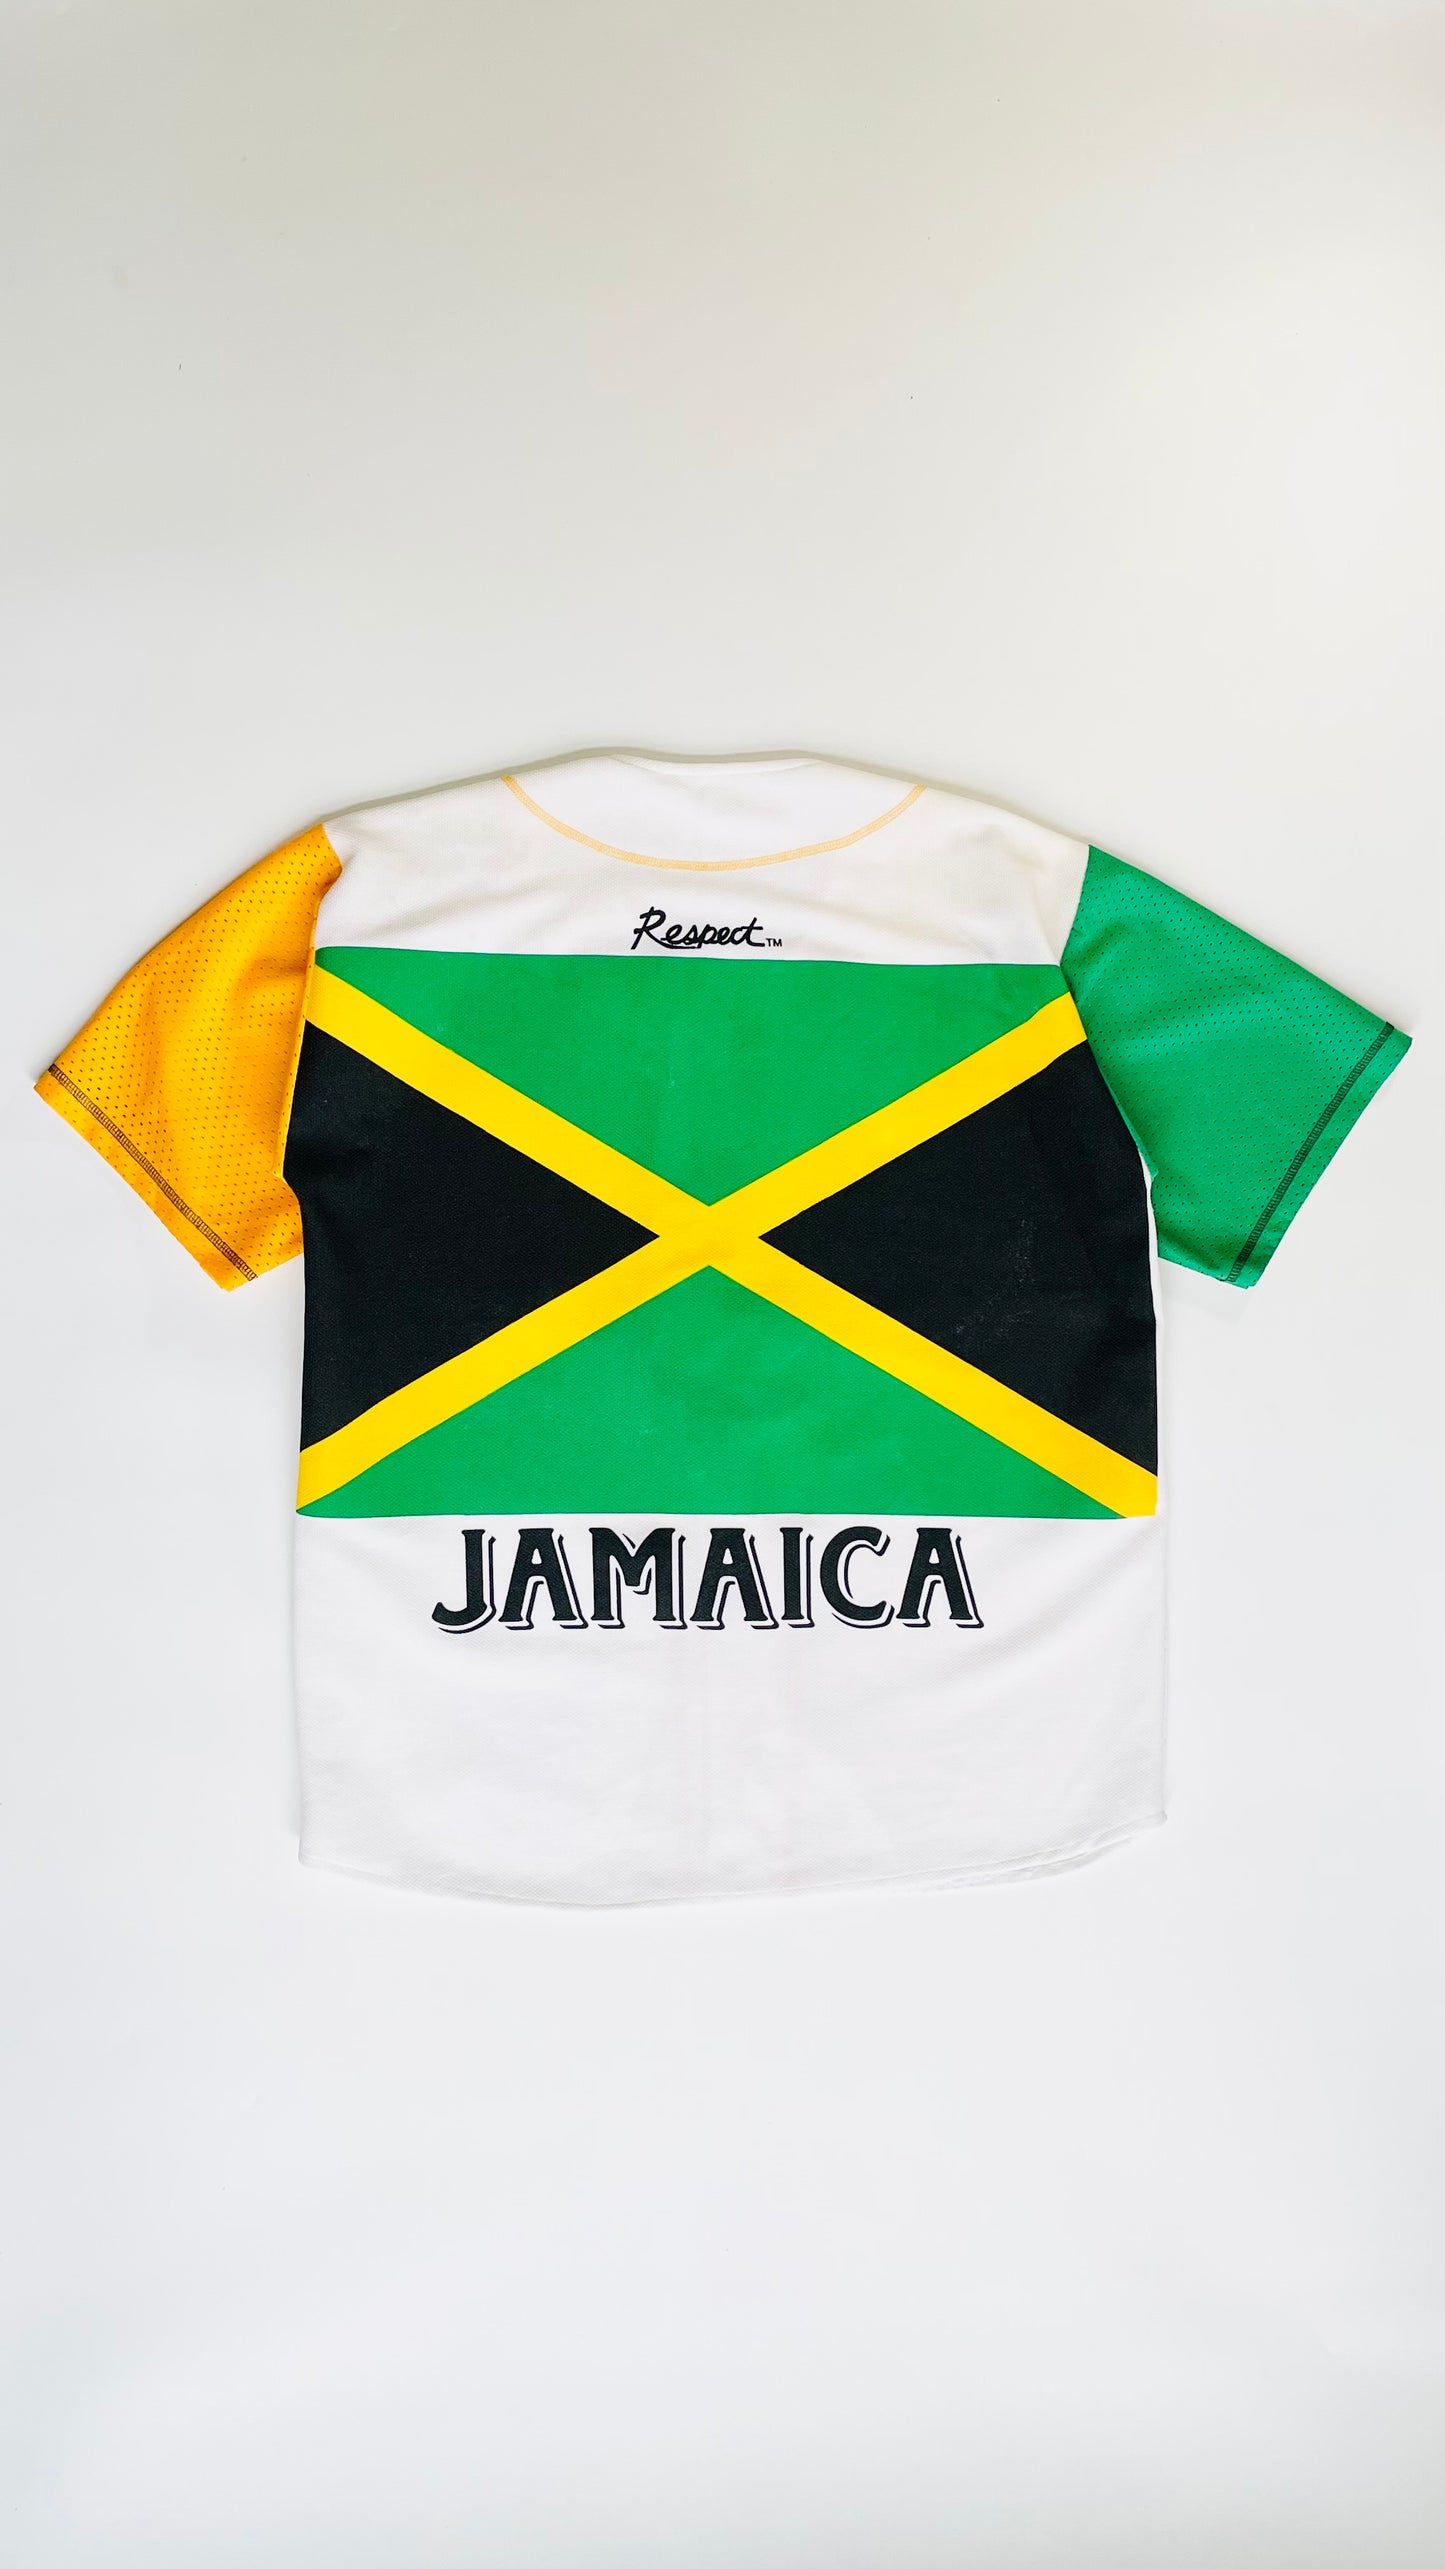 90s Jamaican flag baseball shirt  - Size XXL